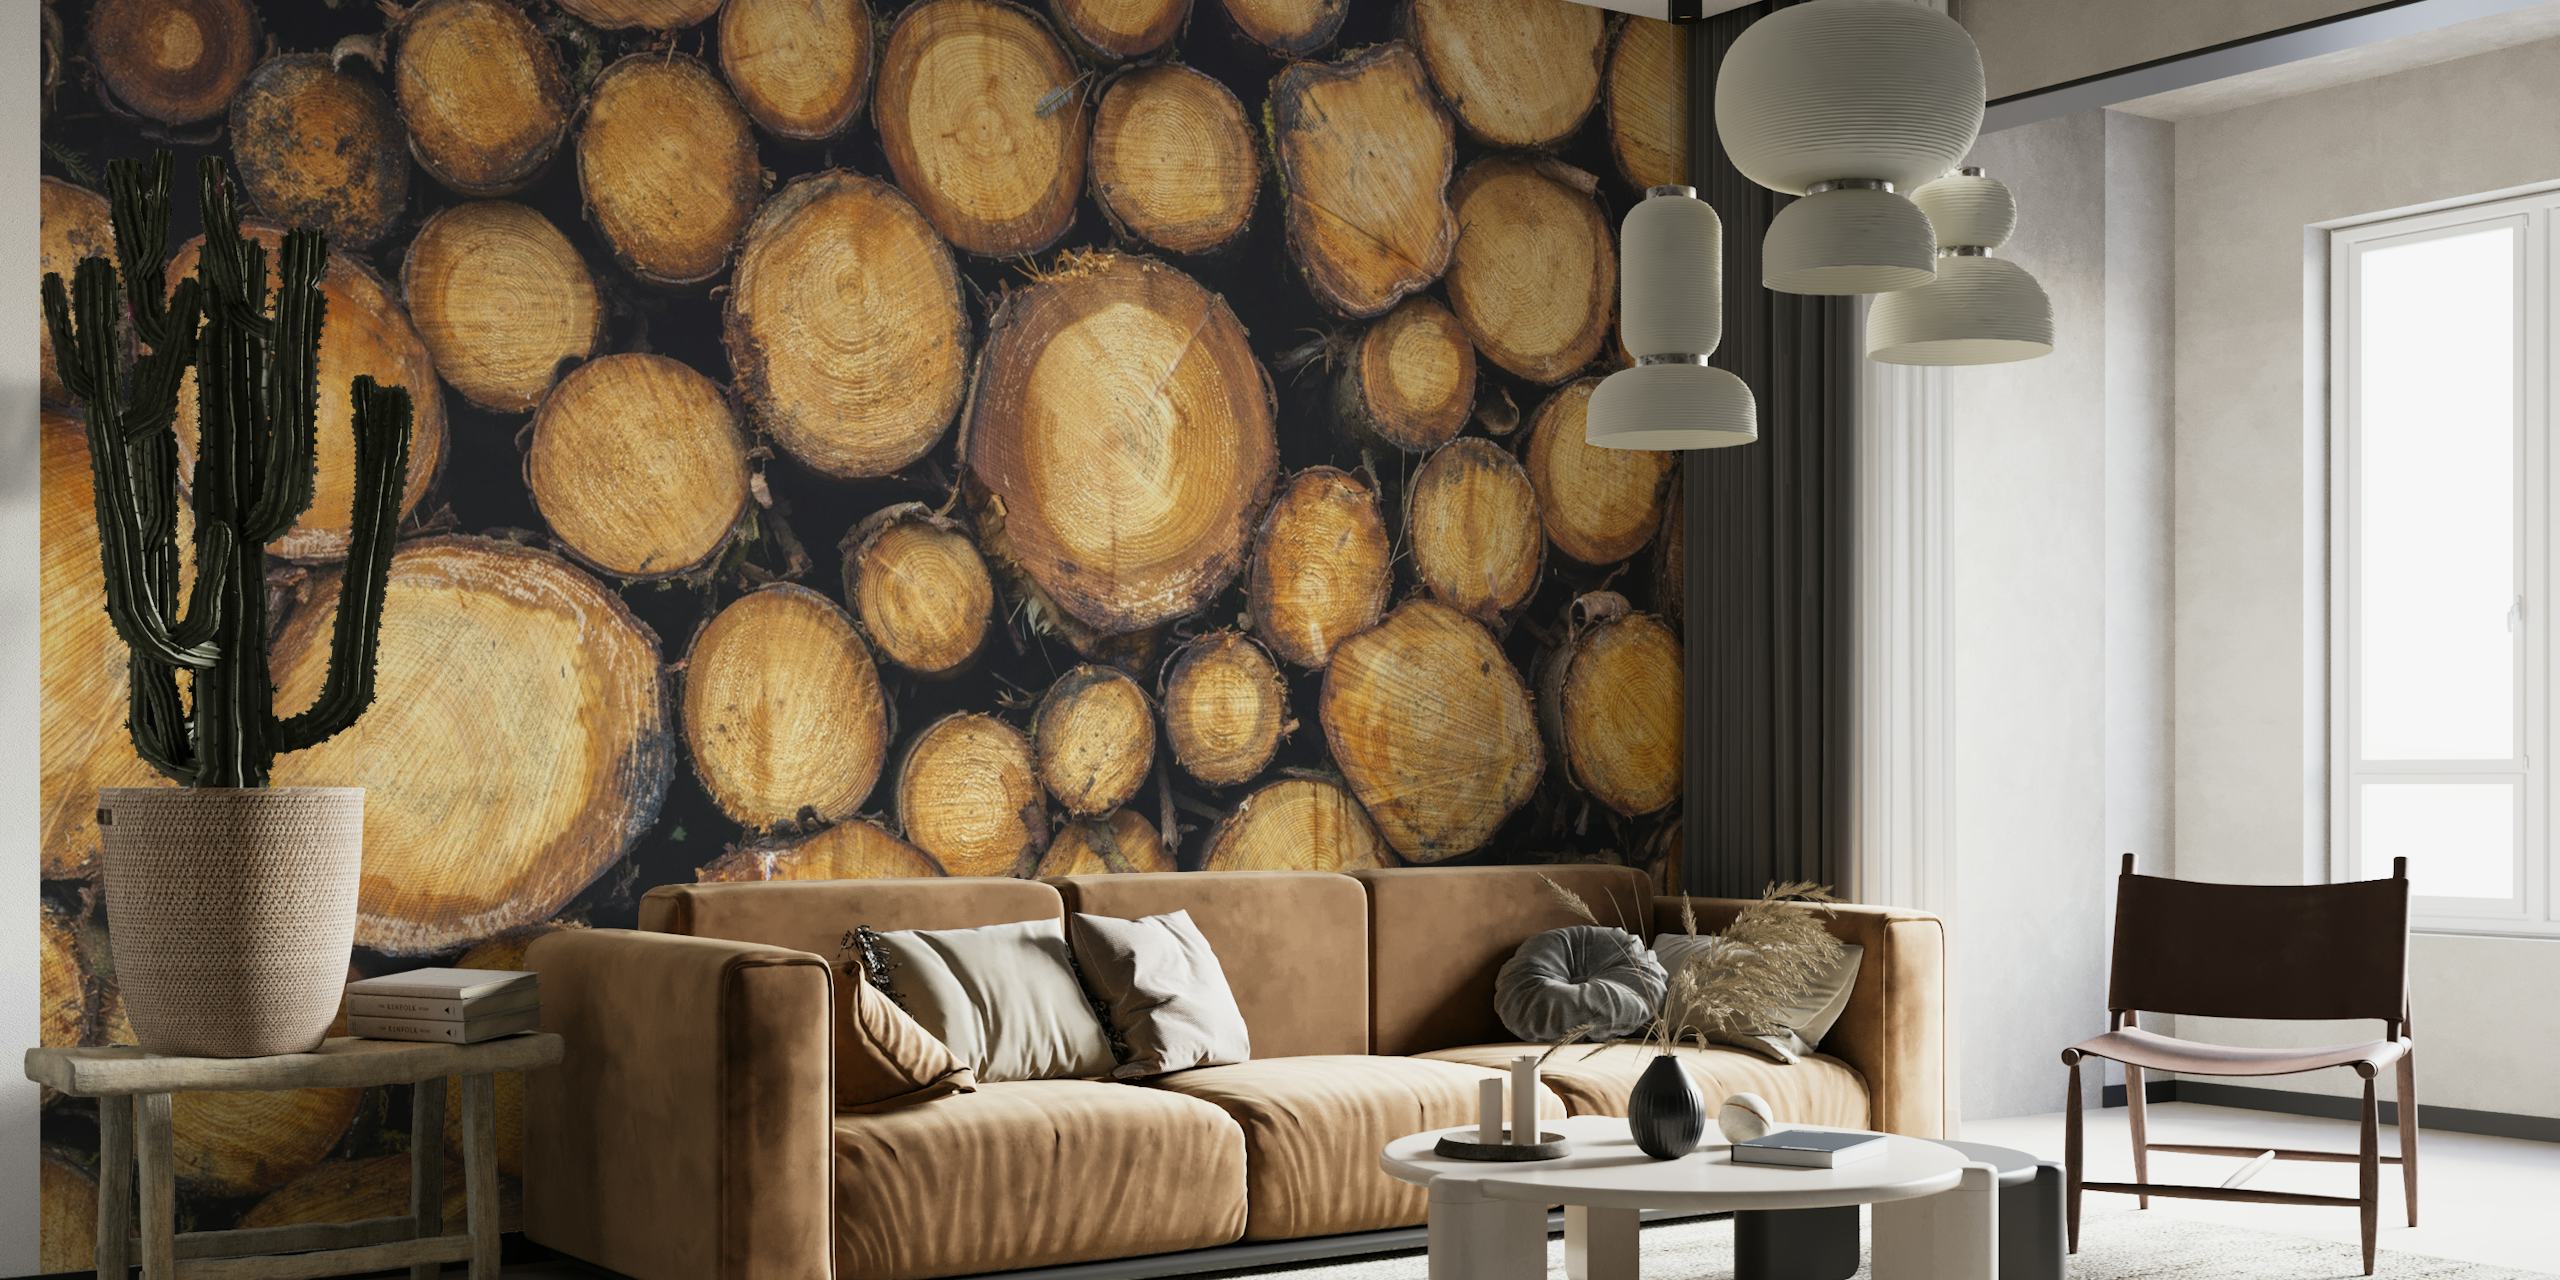 Krupni plan teksture naslaganih drvenih trupaca na zidu